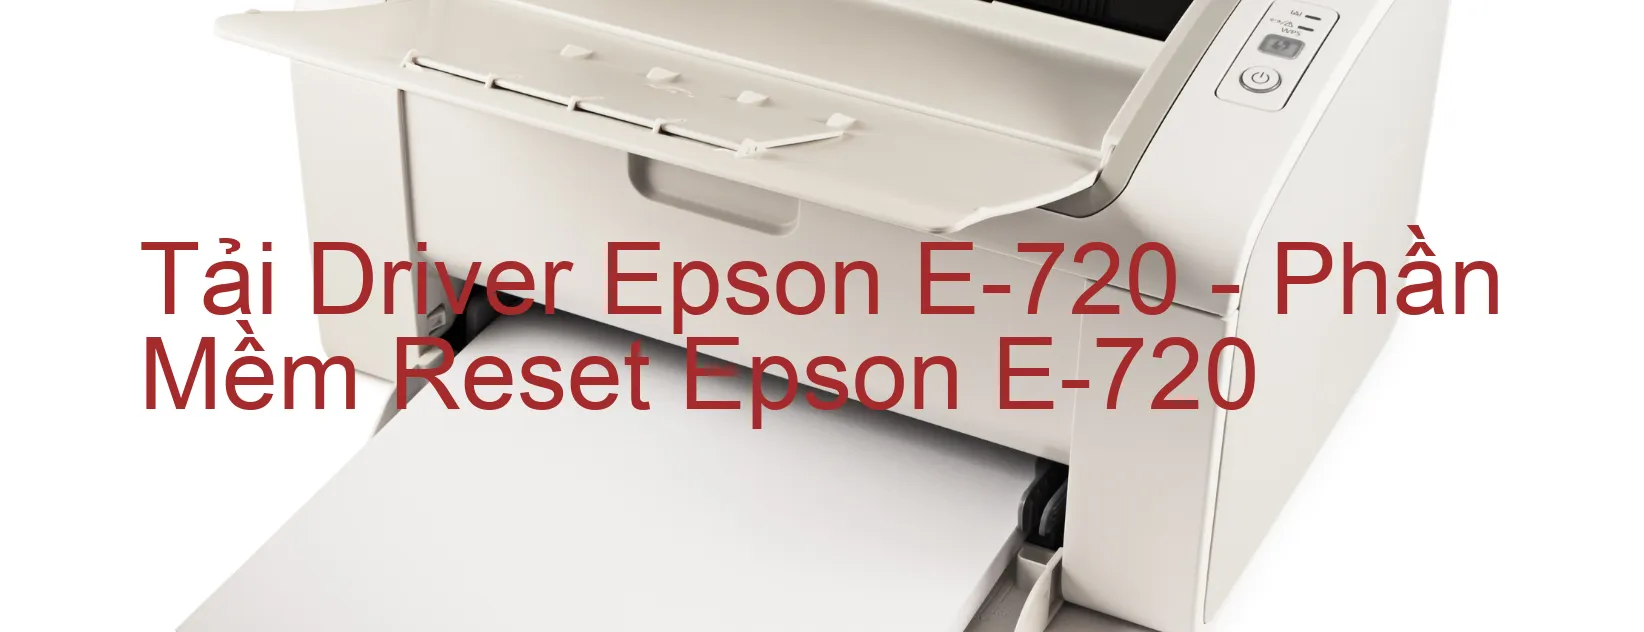 Driver Epson E-720, Phần Mềm Reset Epson E-720